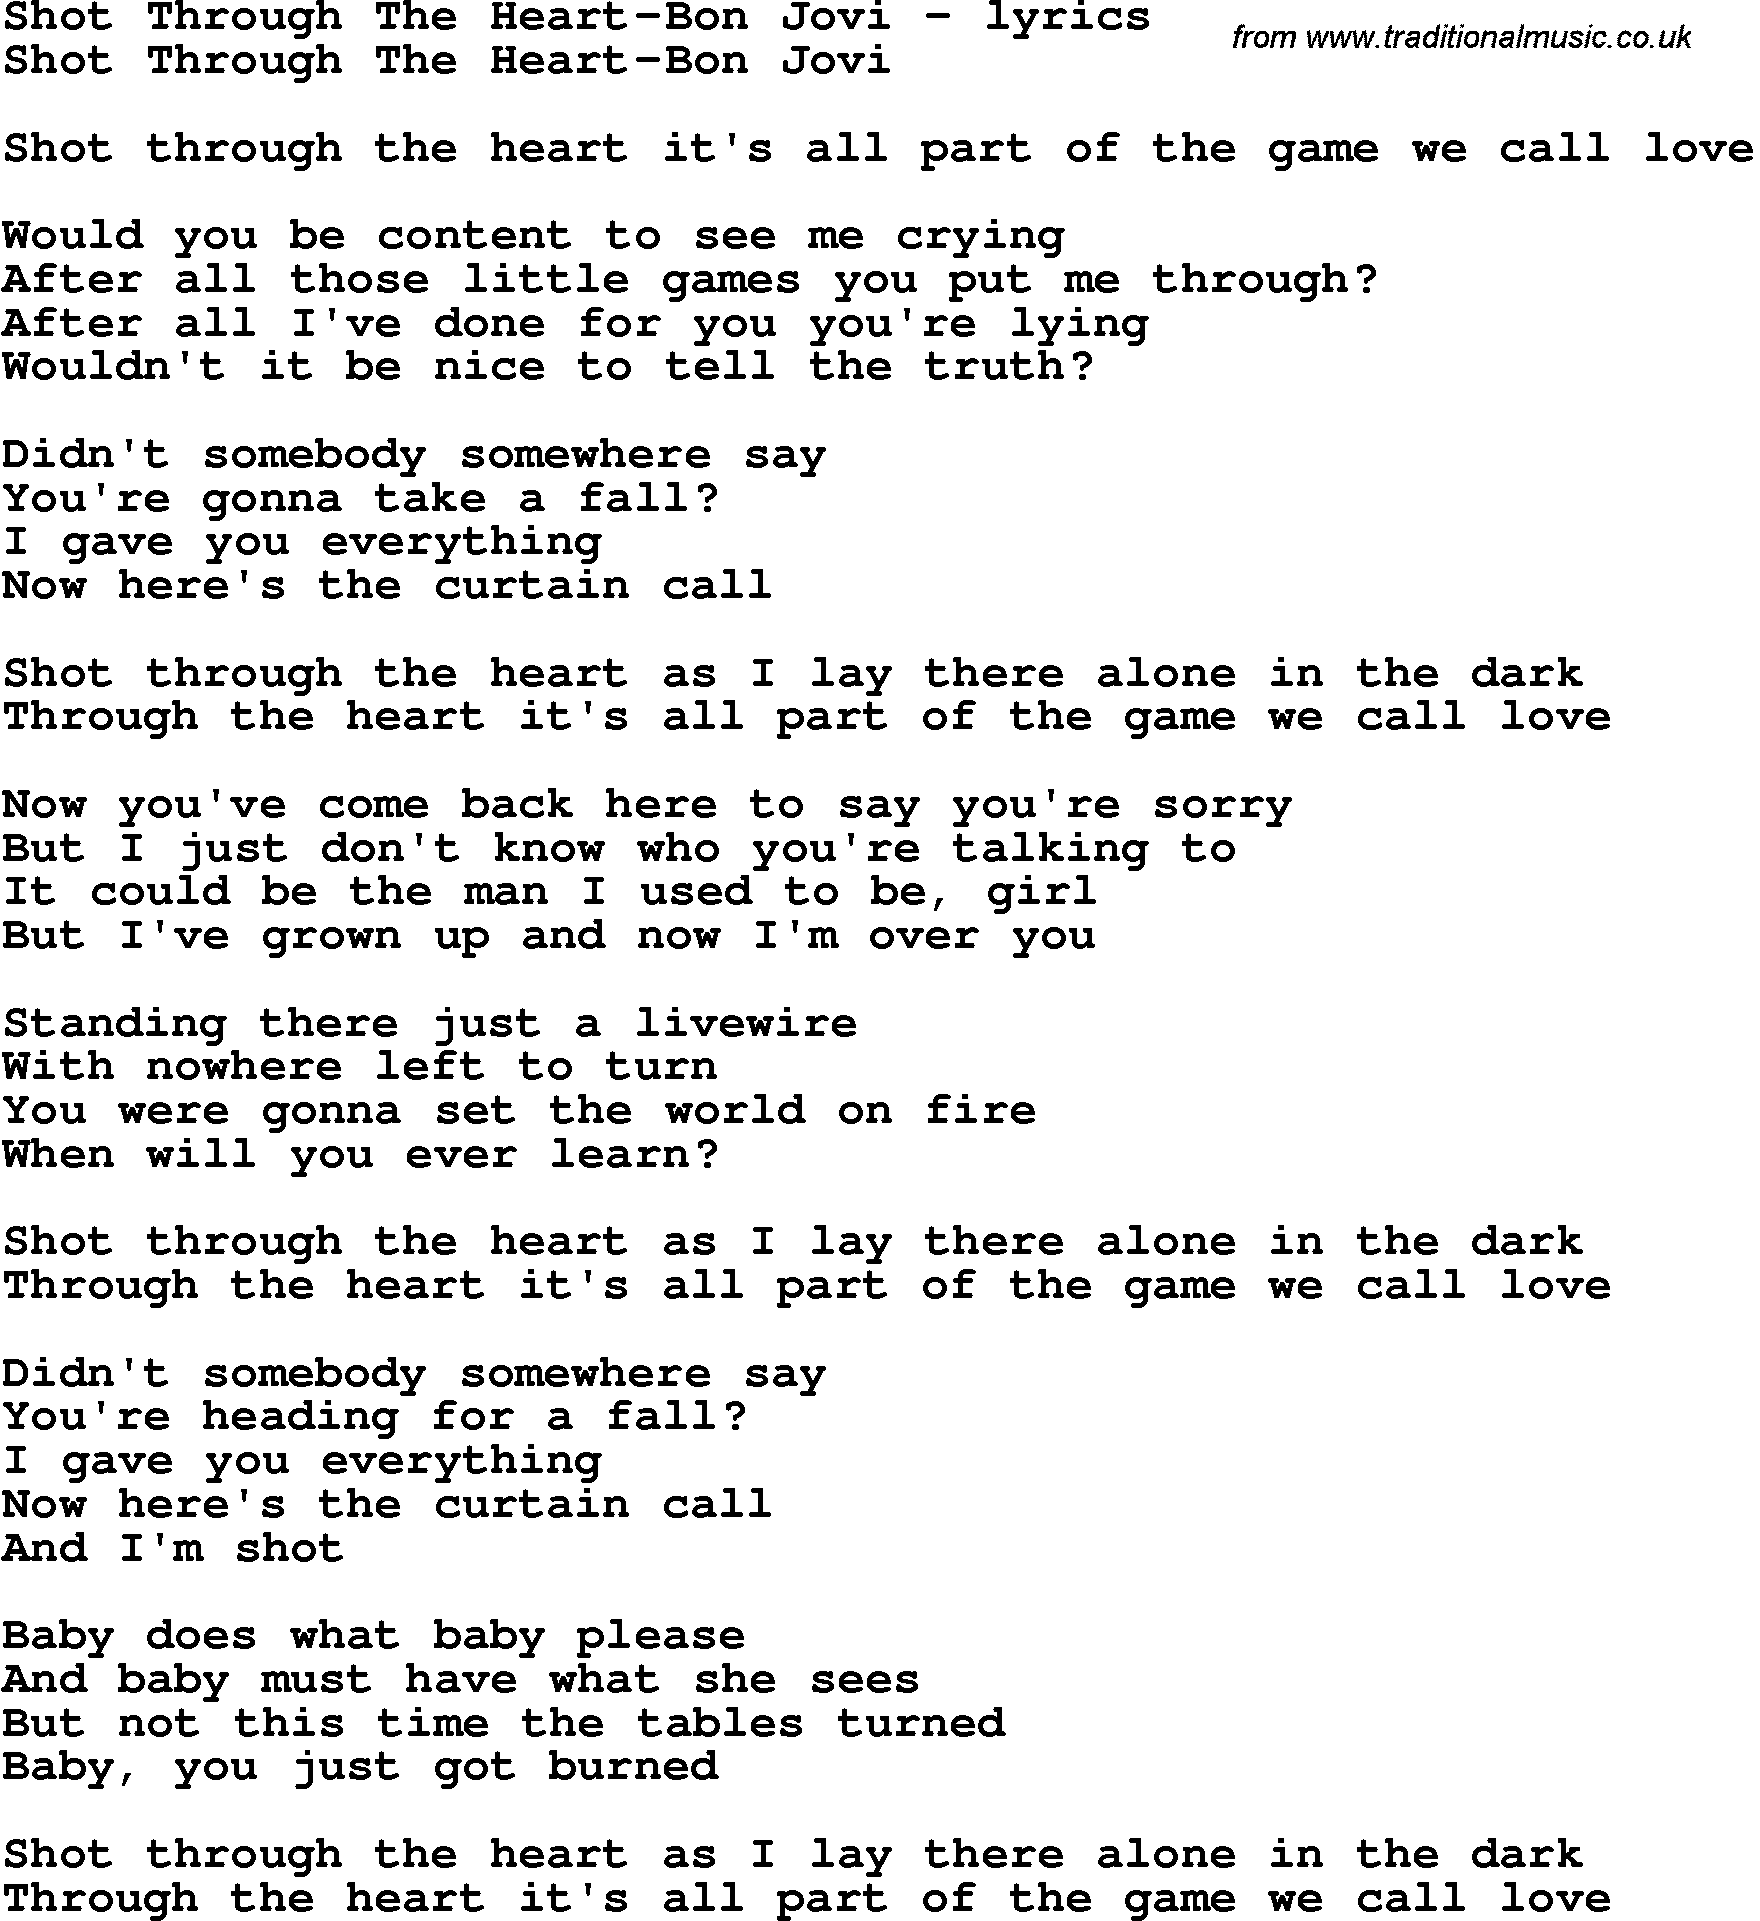 Love Song Lyrics for: Shot Through The Heart-Bon Jovi